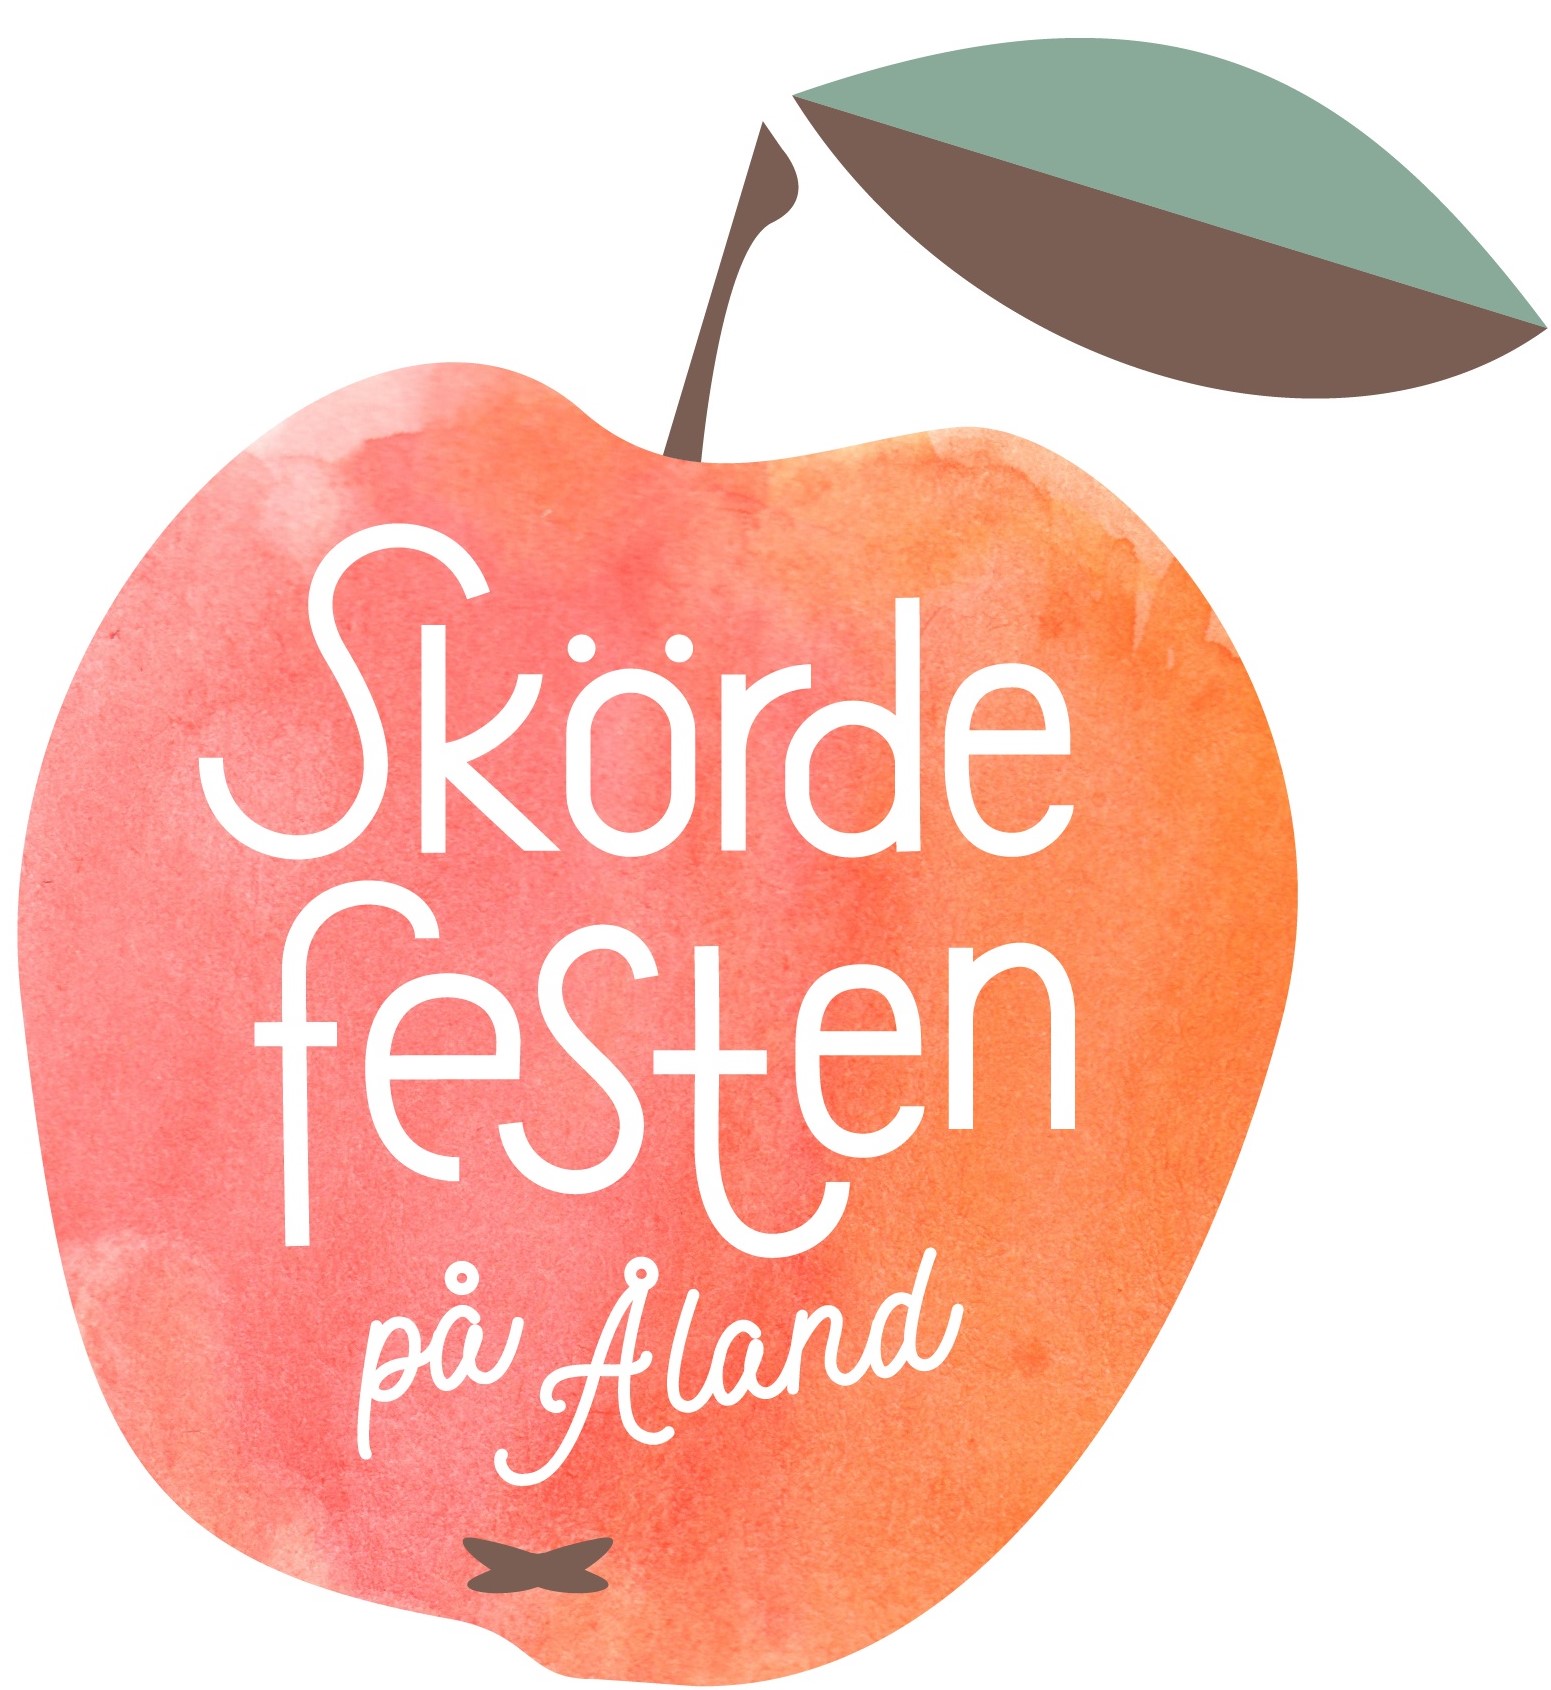 Skördefesten Plåpp Åpp featured image